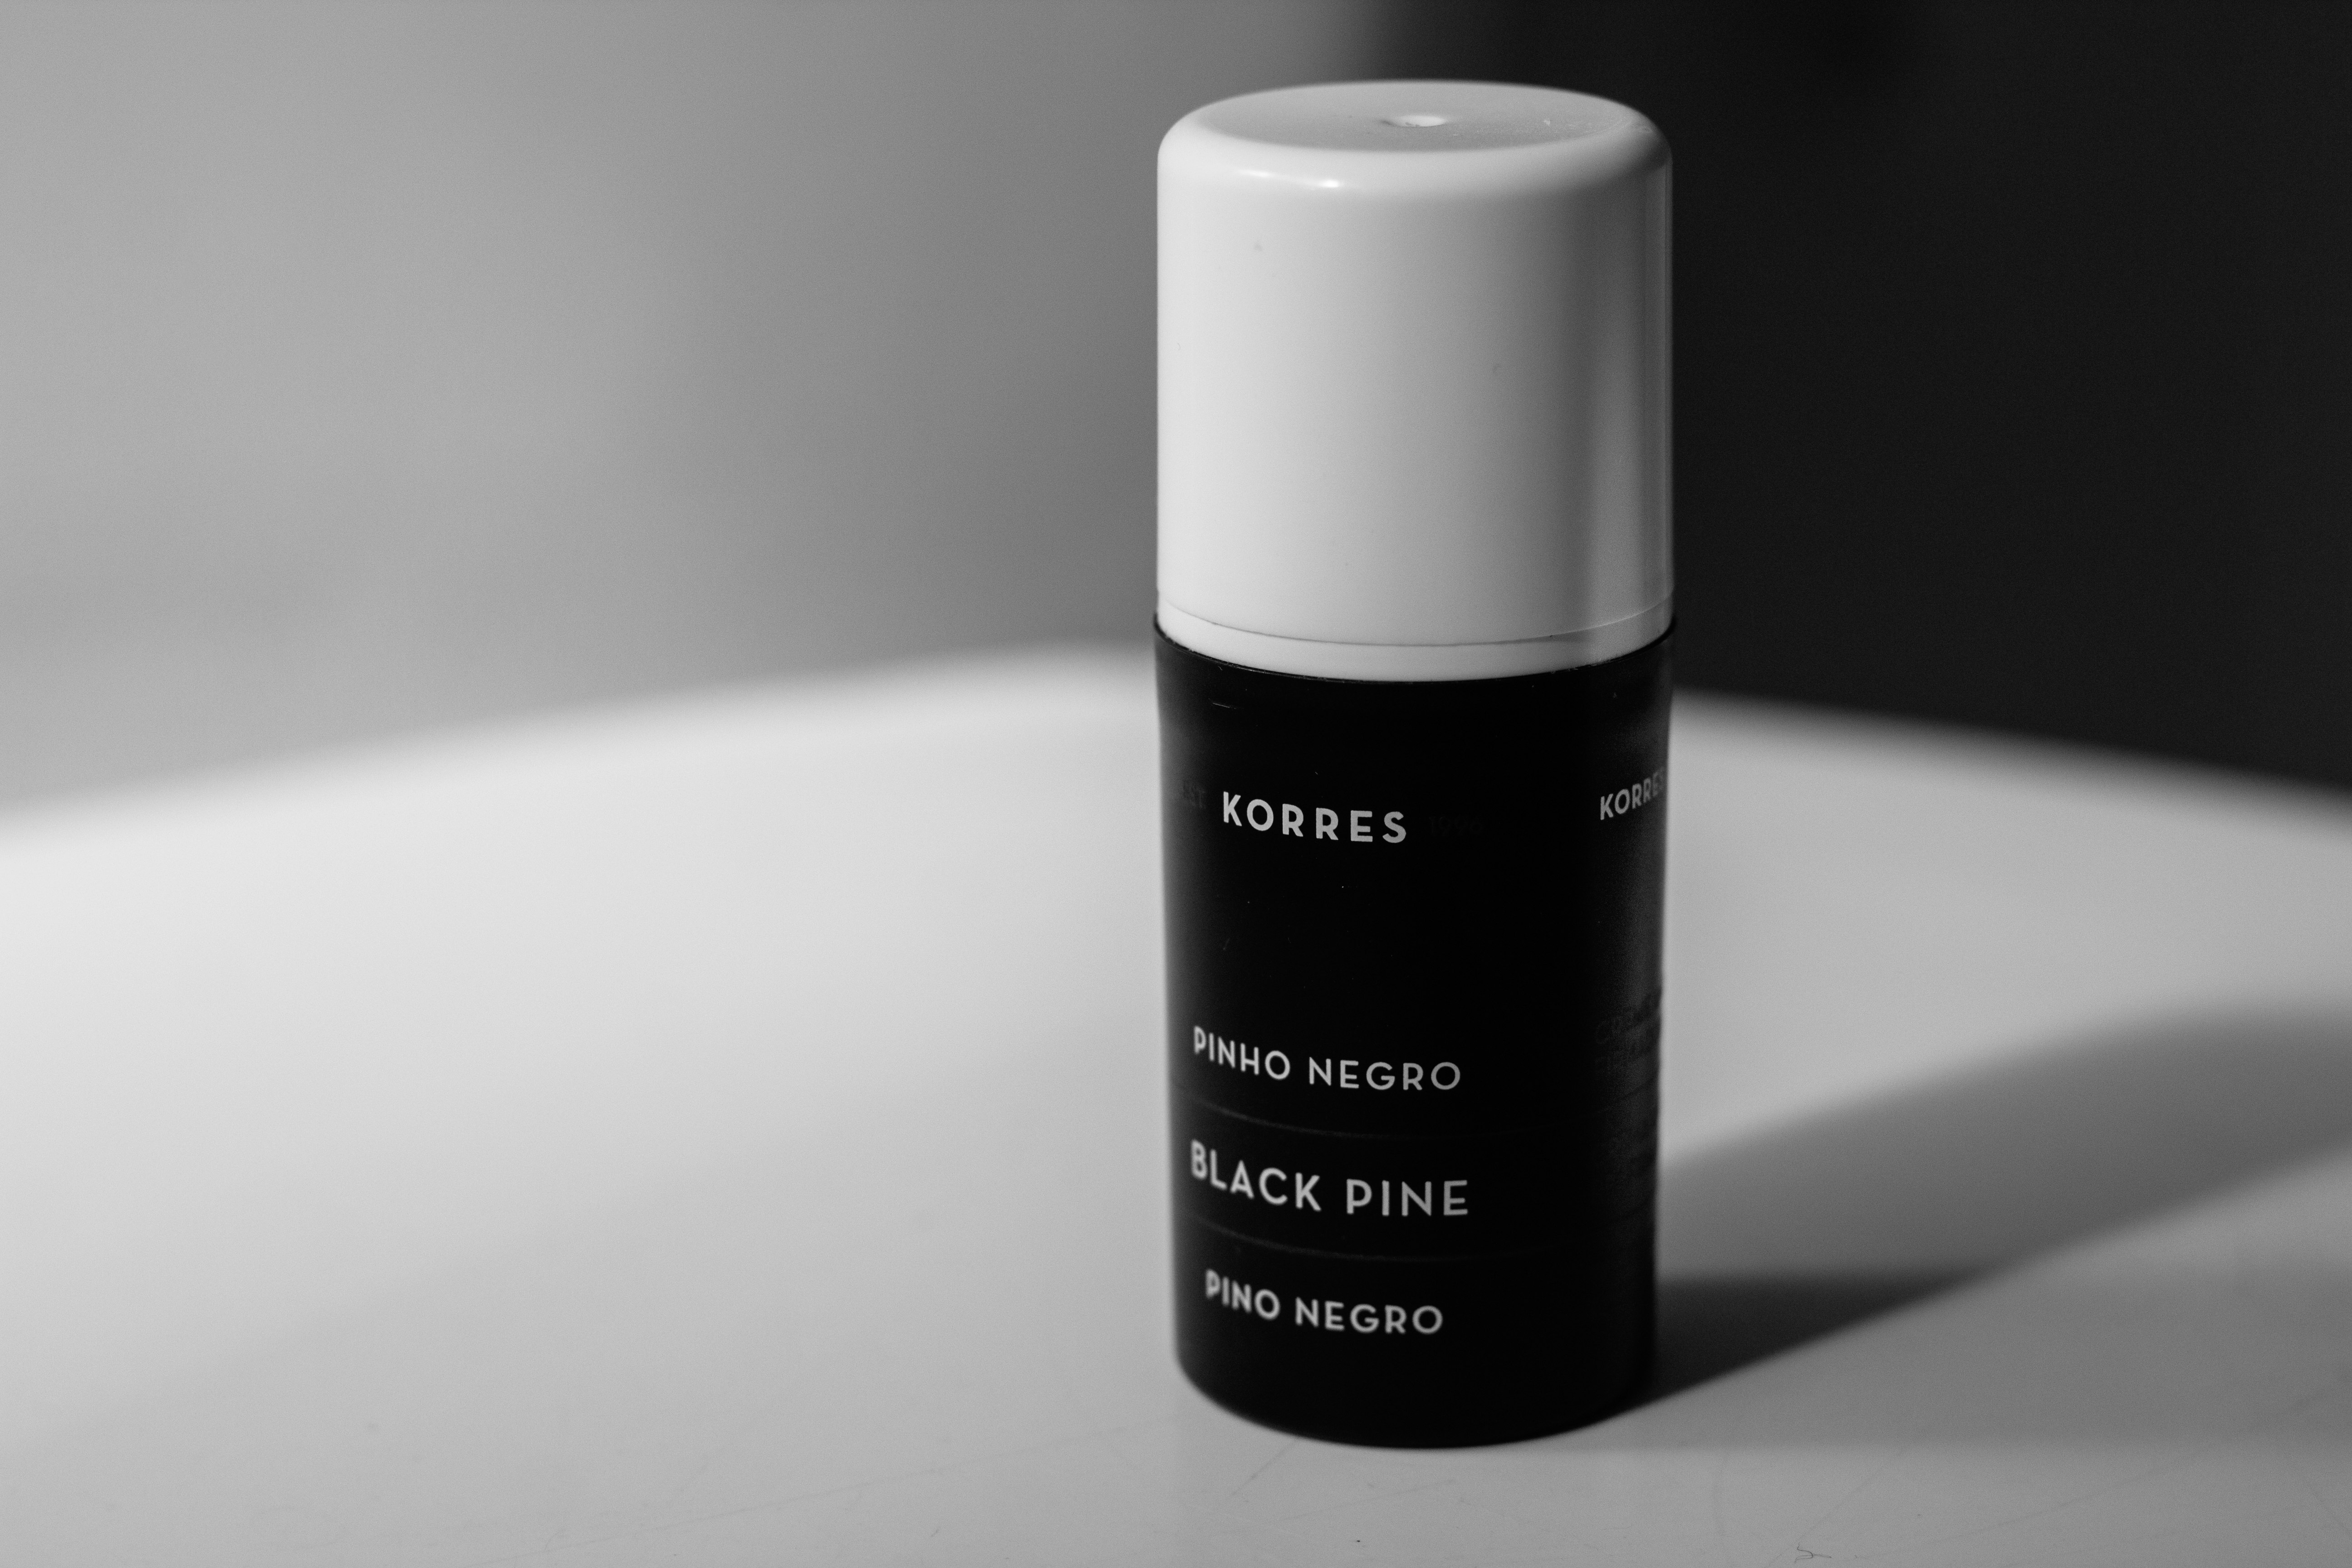 Korres black dine bottle on white surface